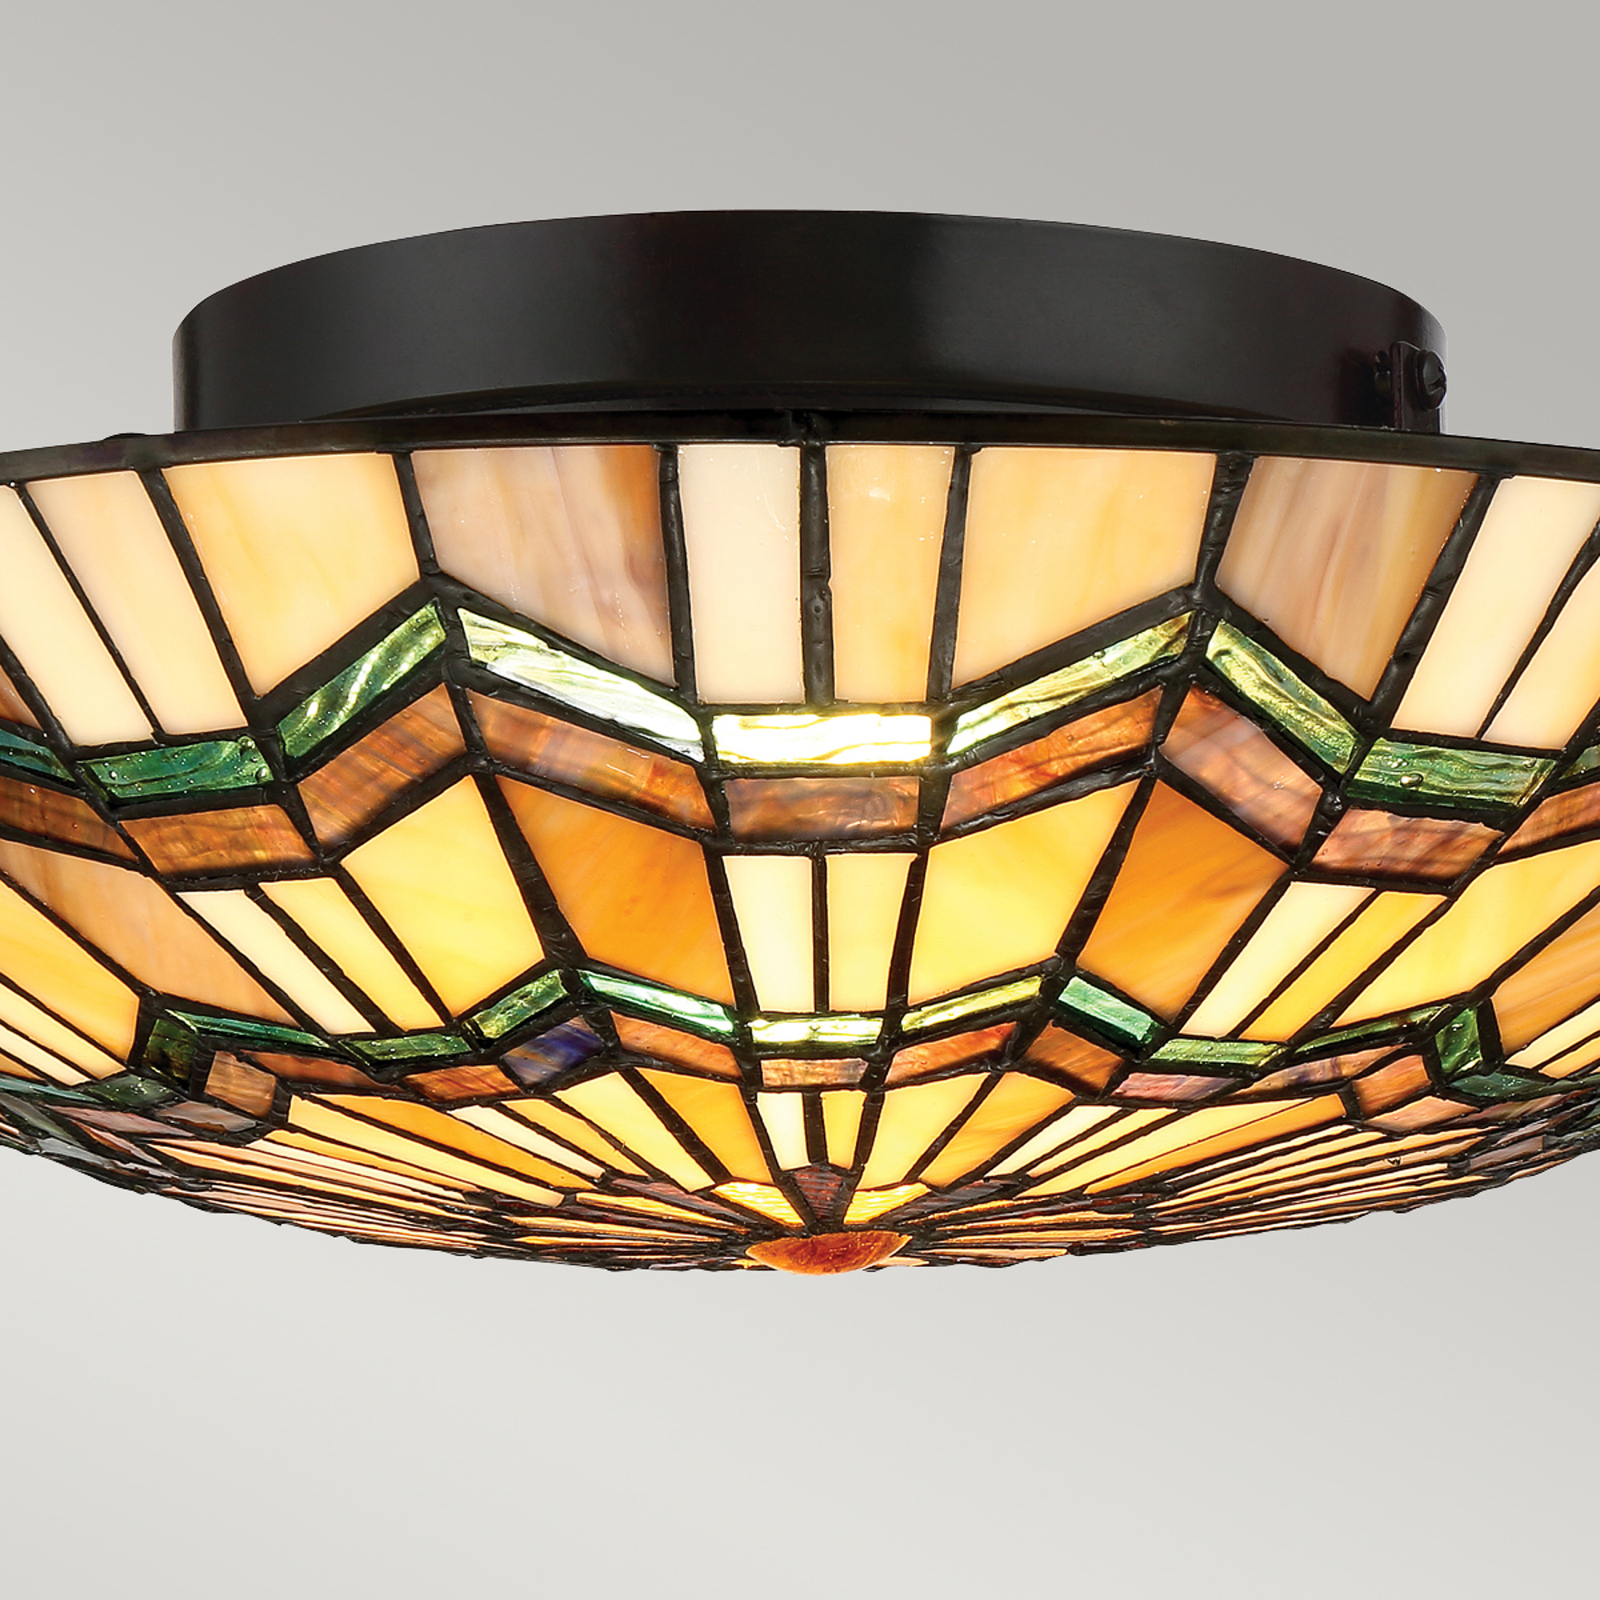 Alcott ceiling lamp in a Tiffany design